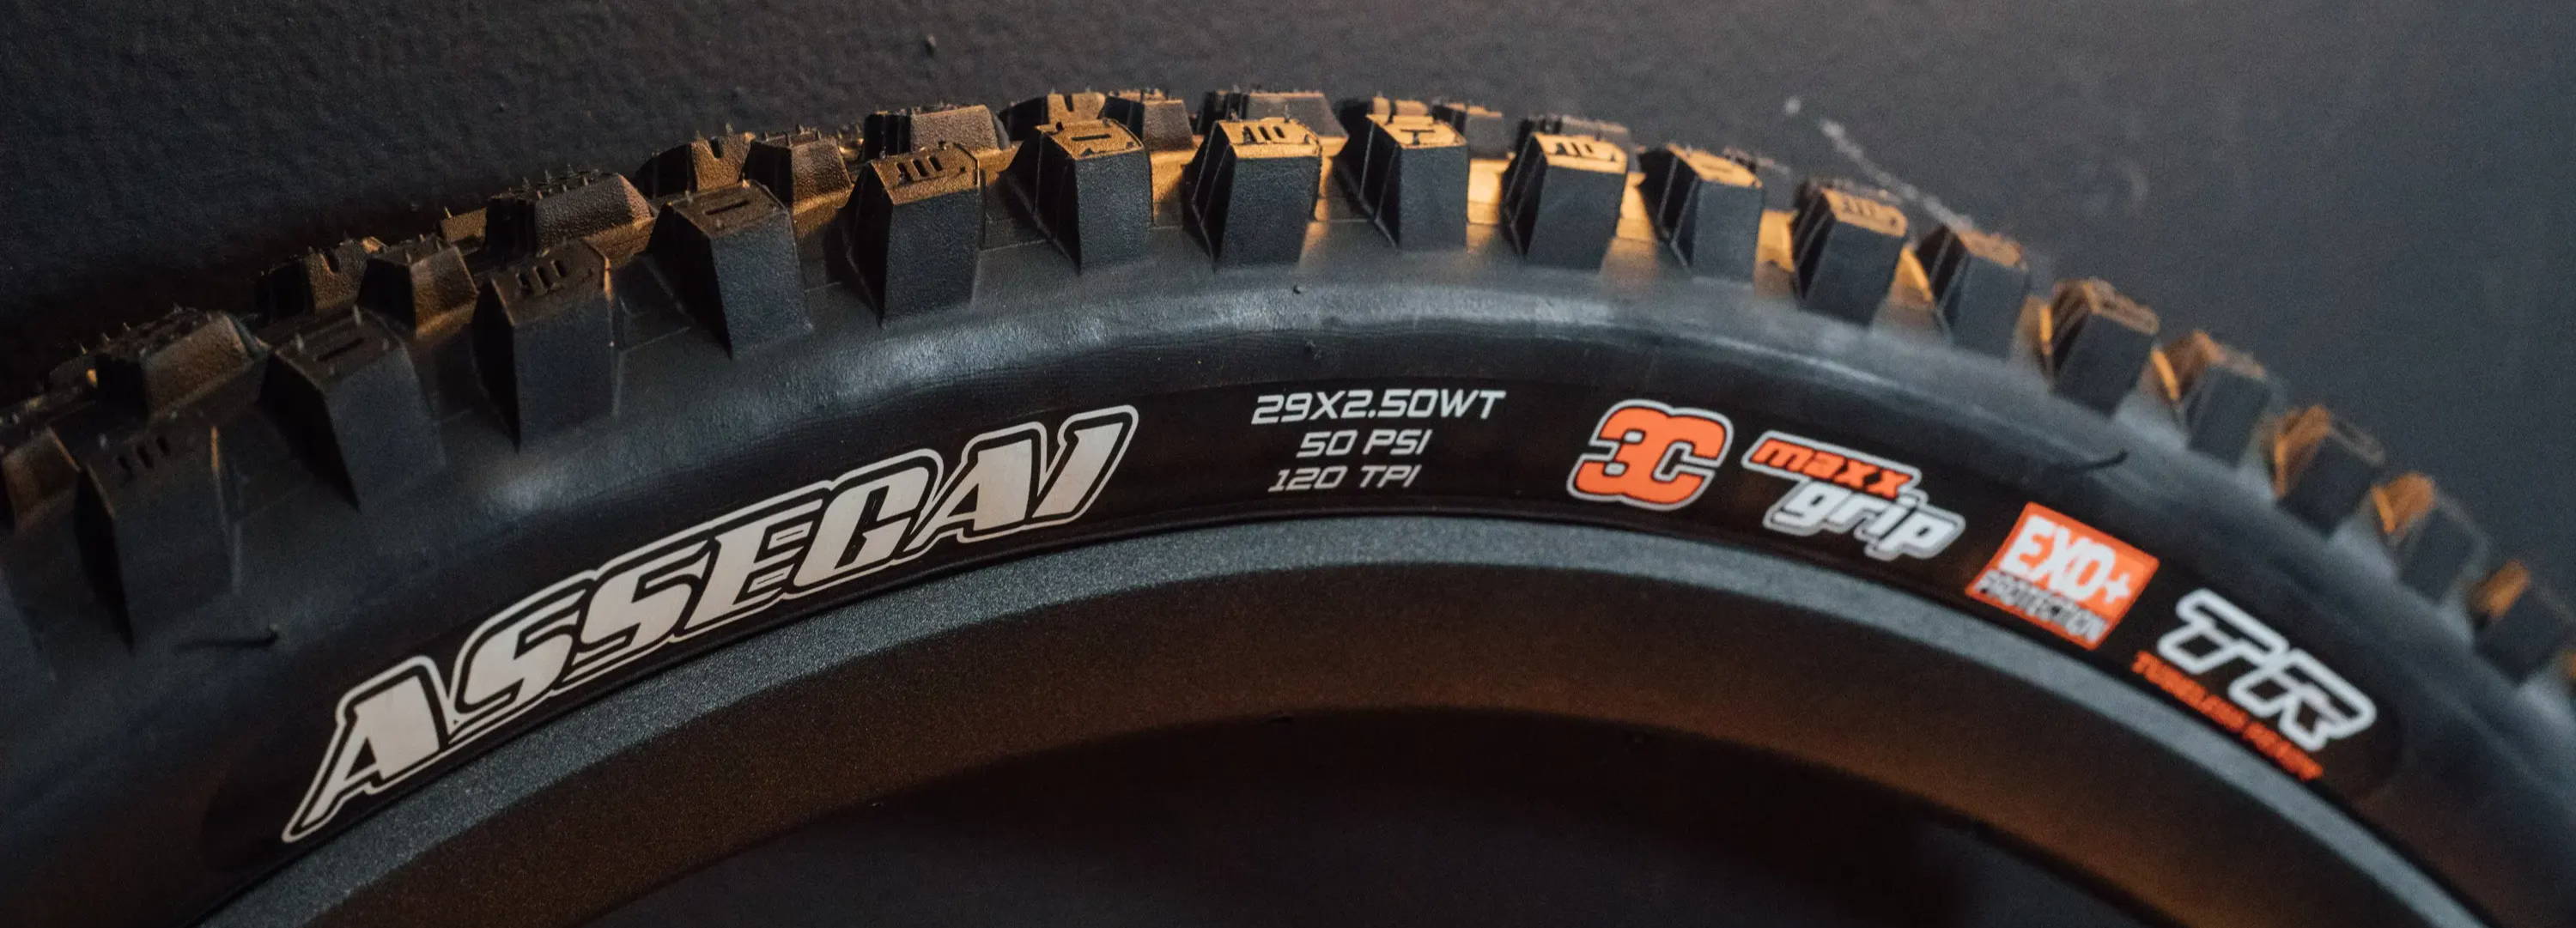 Maxxis Assegai MTB tire detail of sidewall labels 3c maxx grip exo+ protection